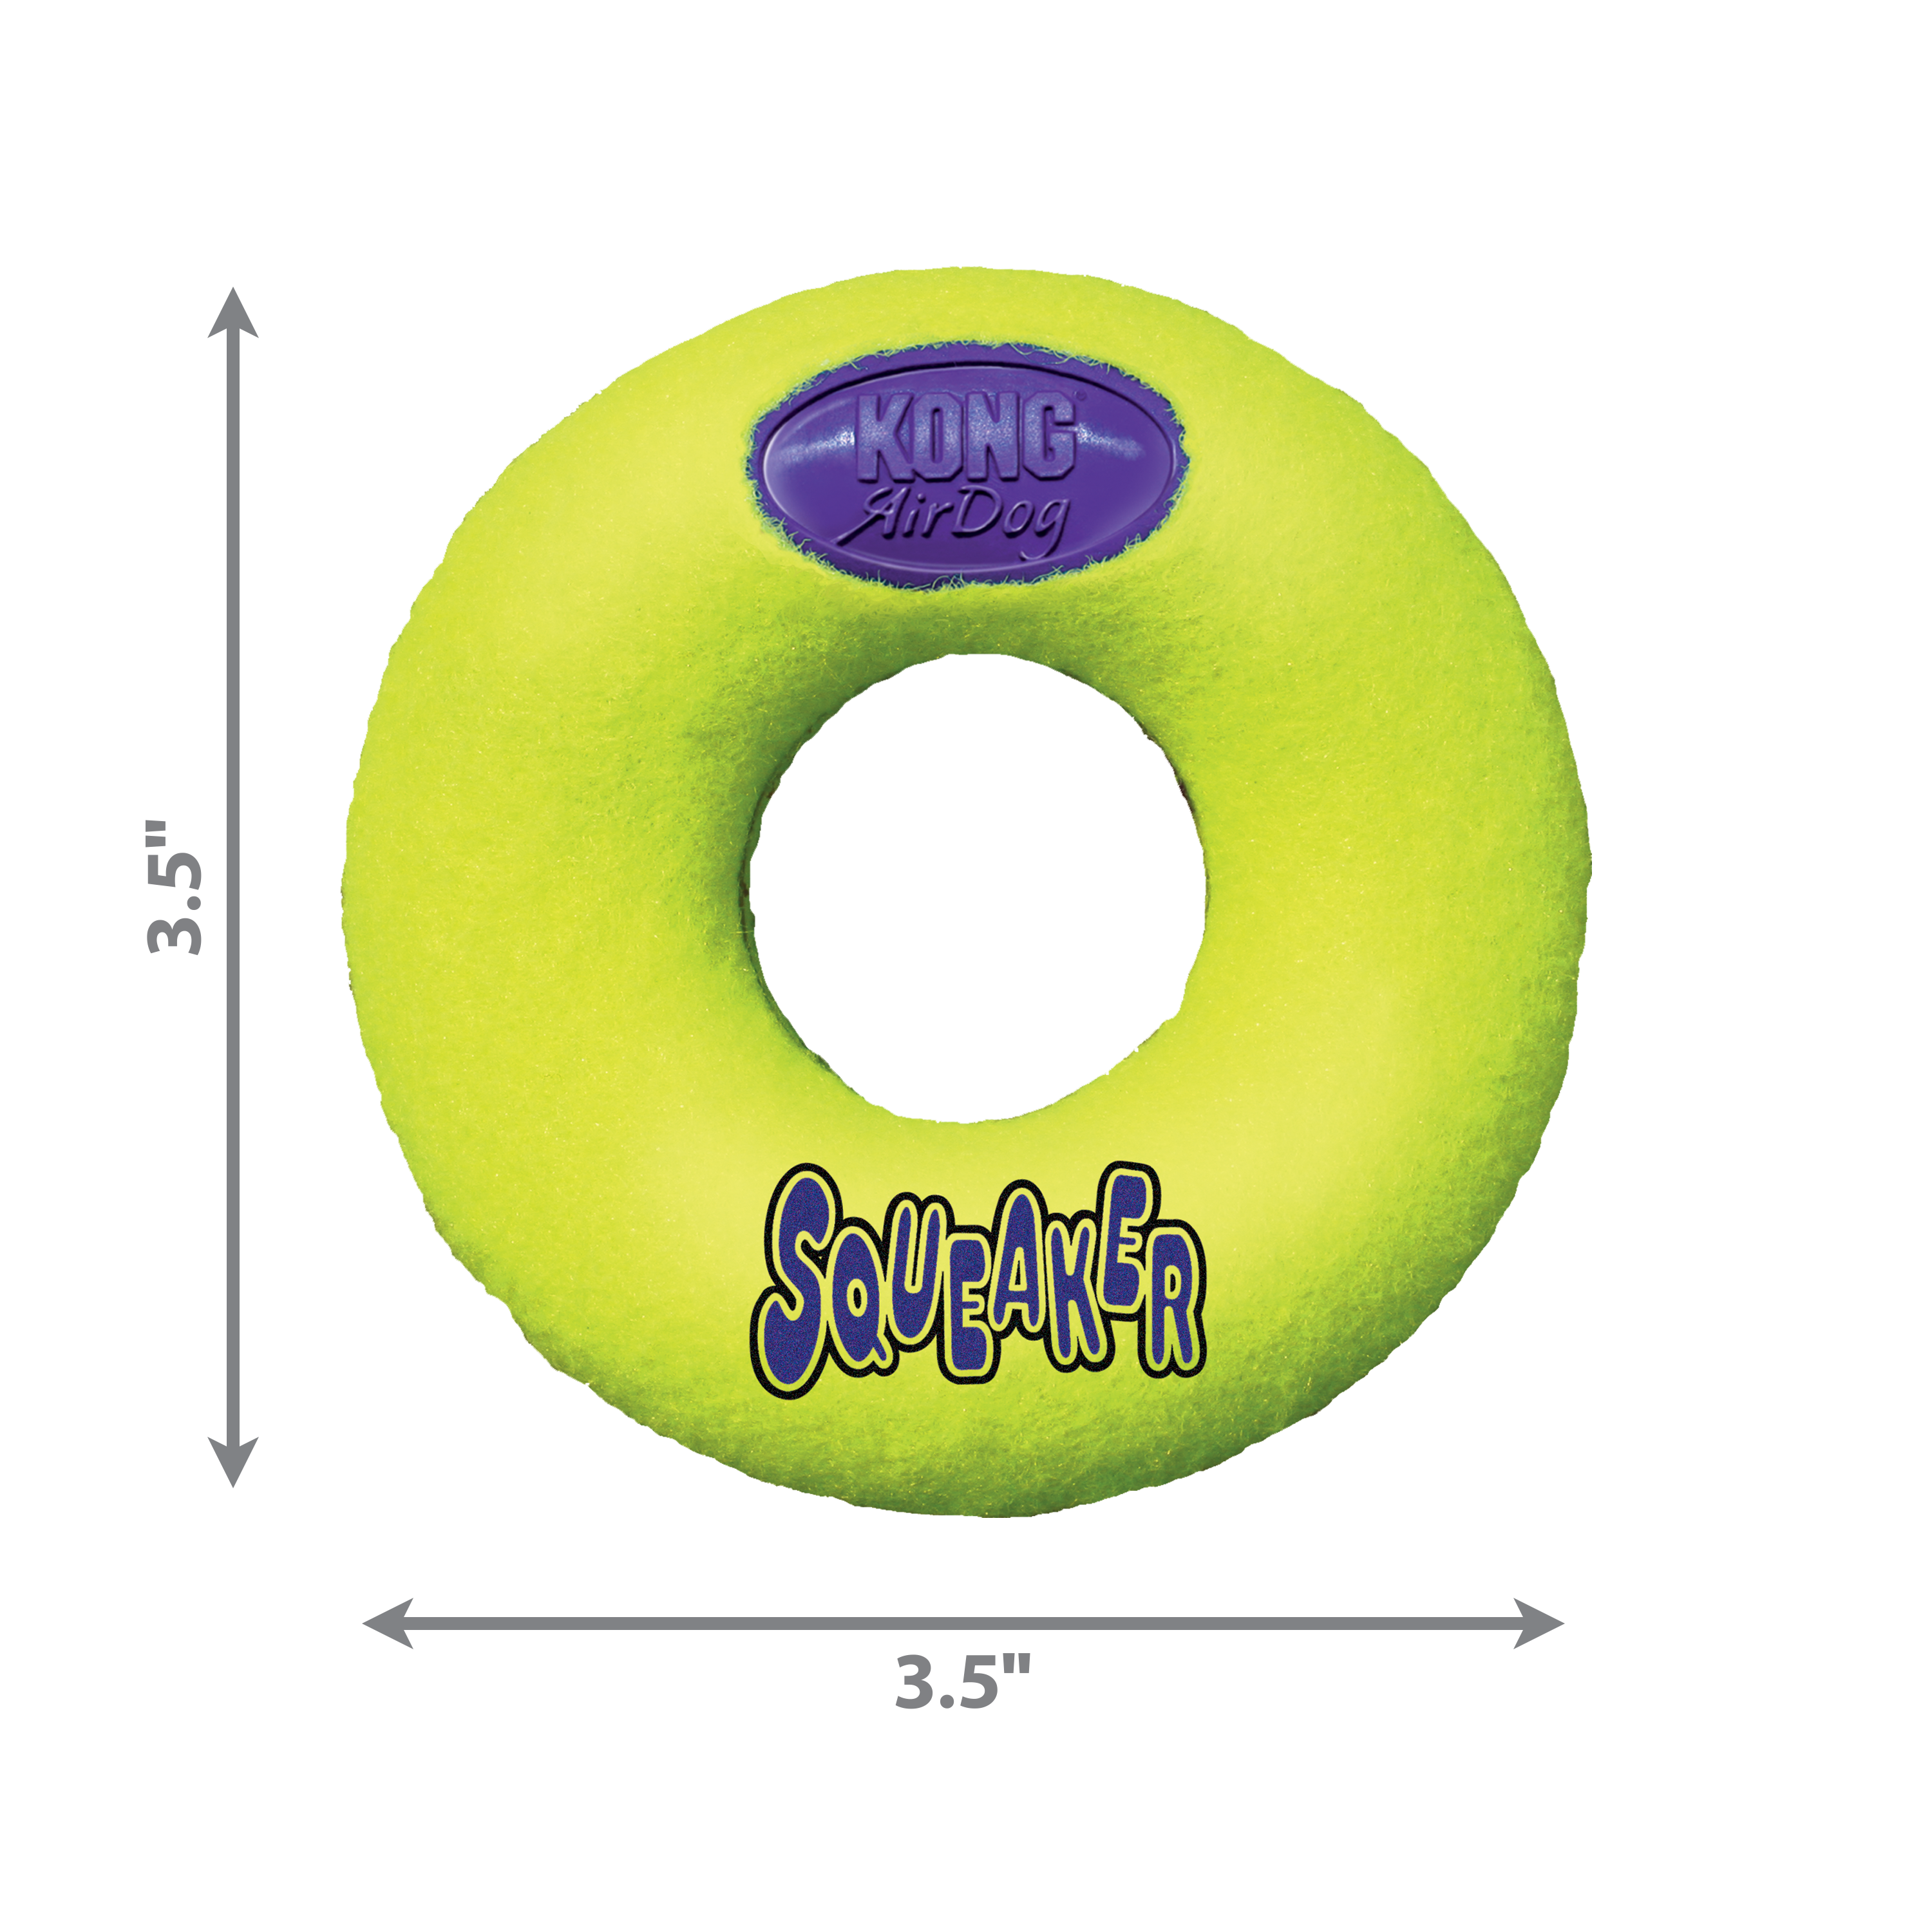 AirDog Squeaker Donut dimoffpack productafbeelding